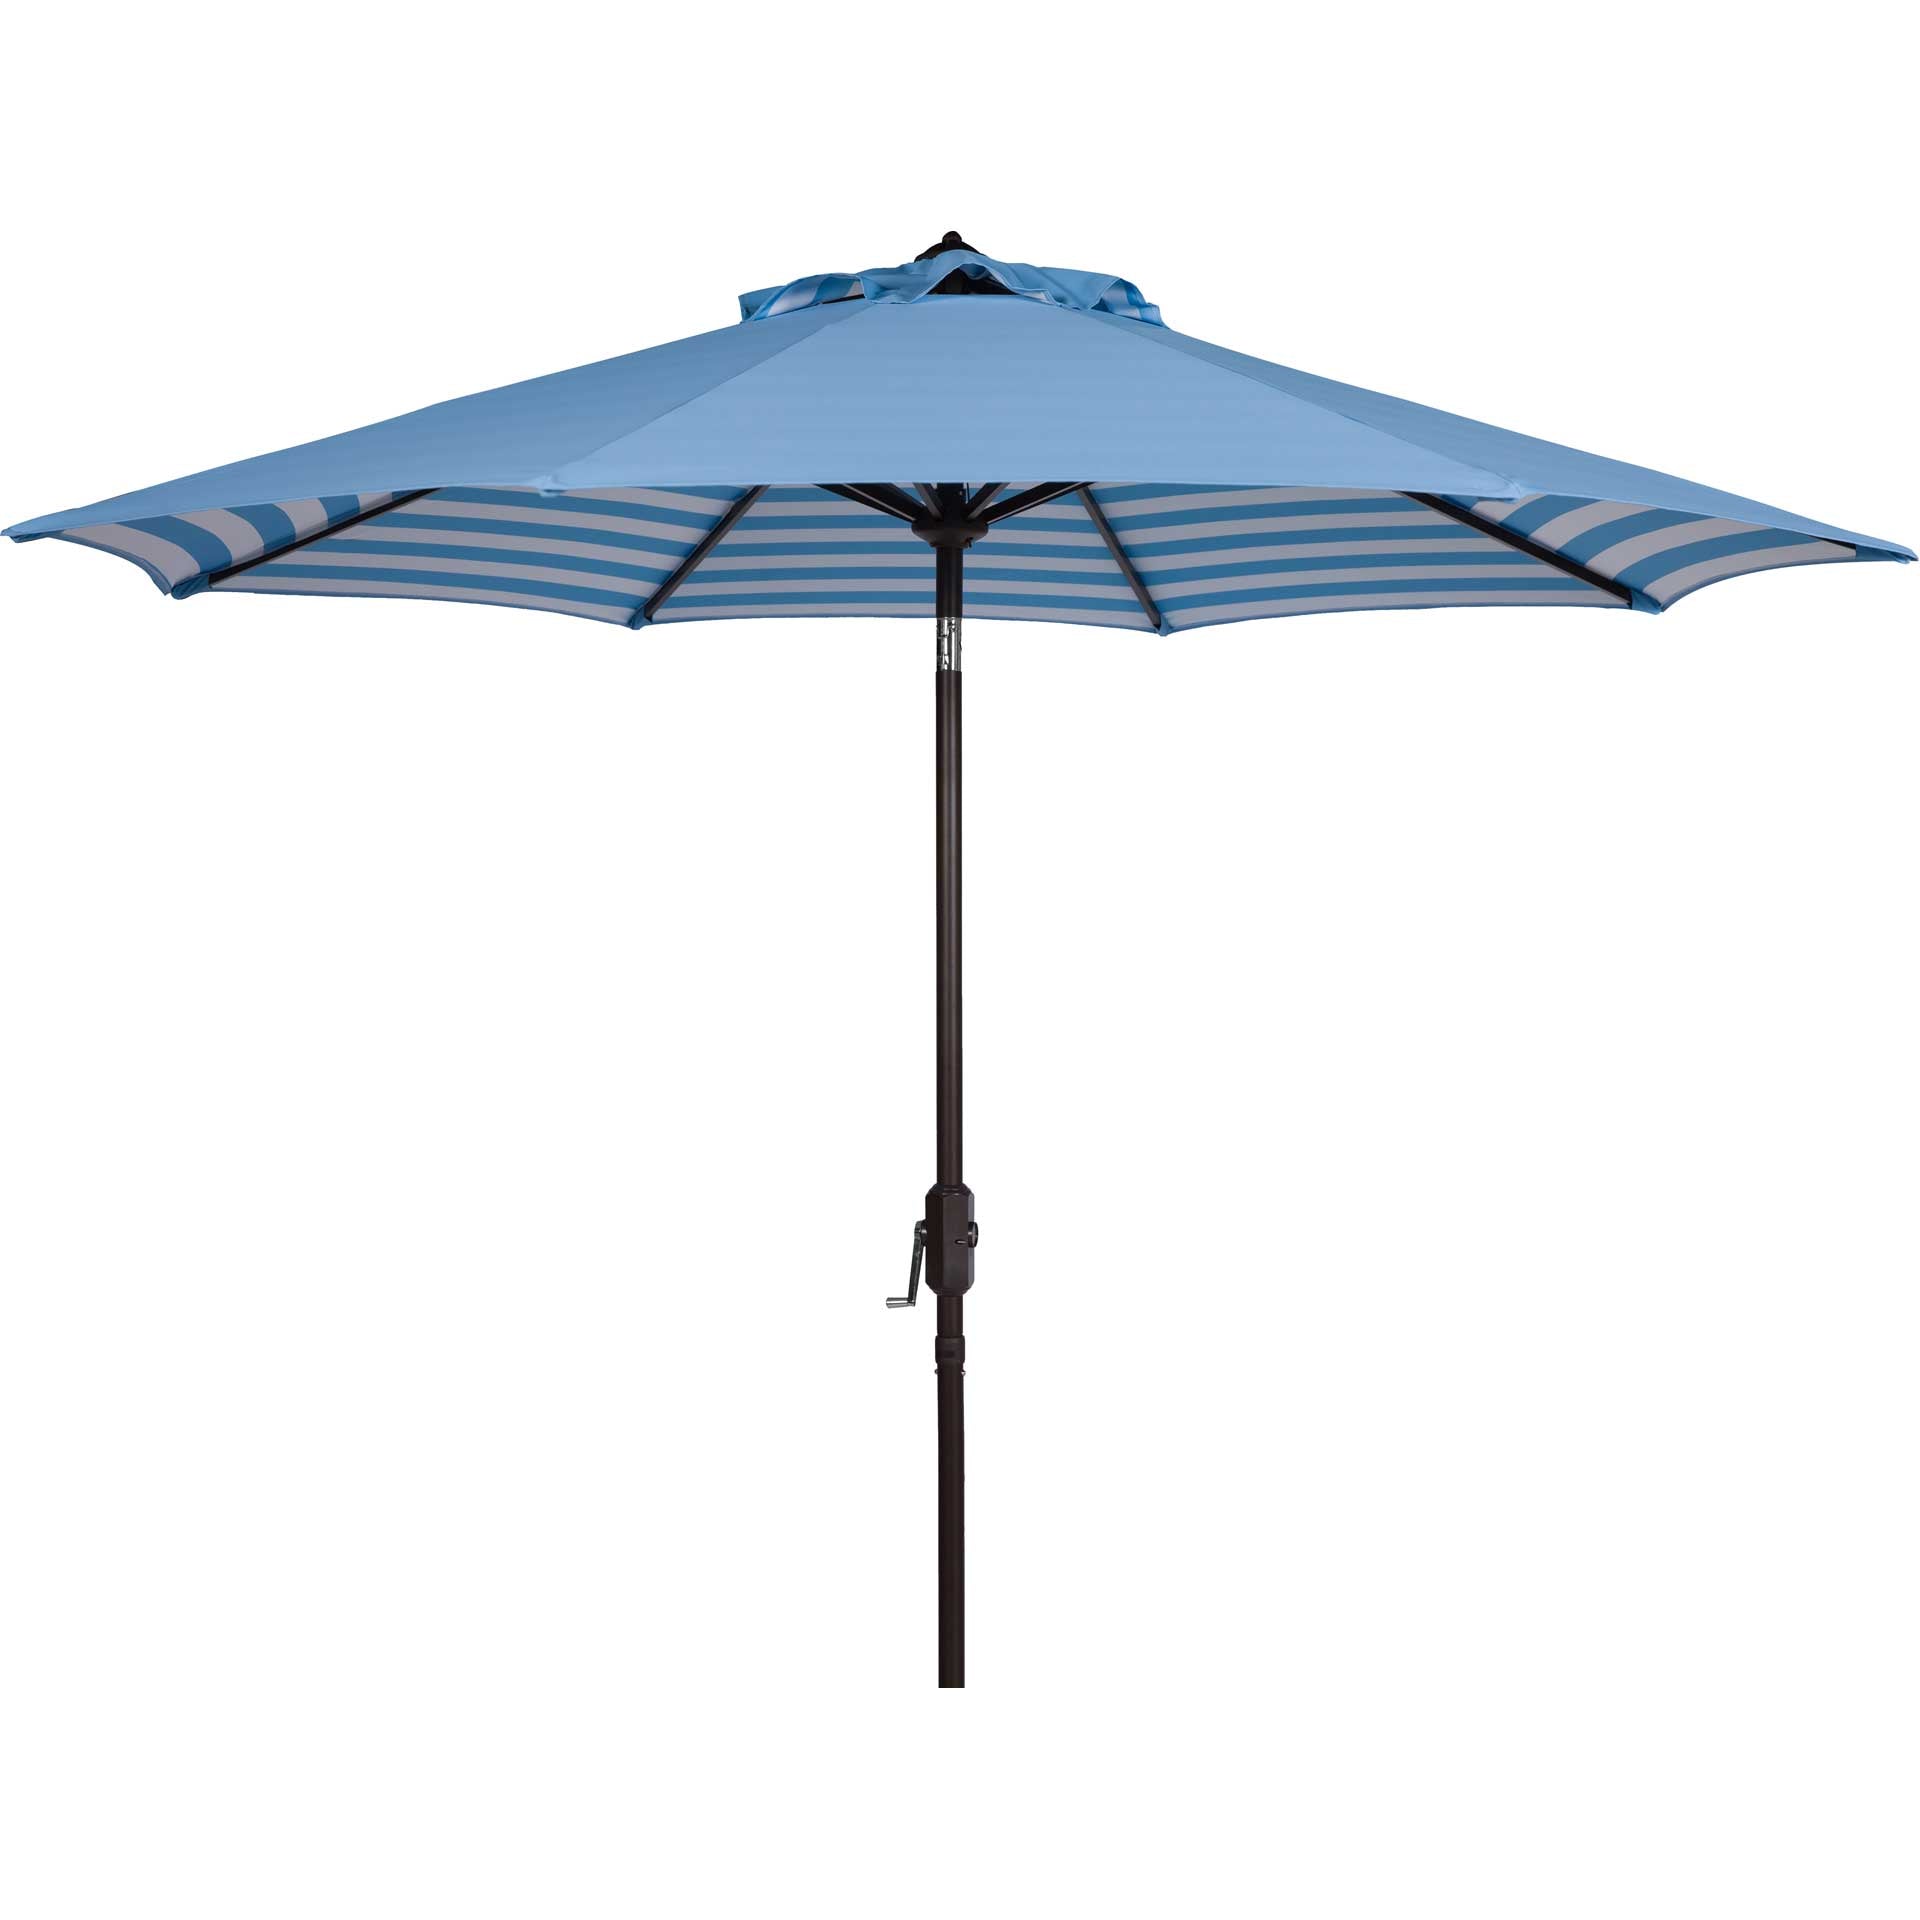 Atara Striped Outdoor Auto Tilt Umbrella Blue/White